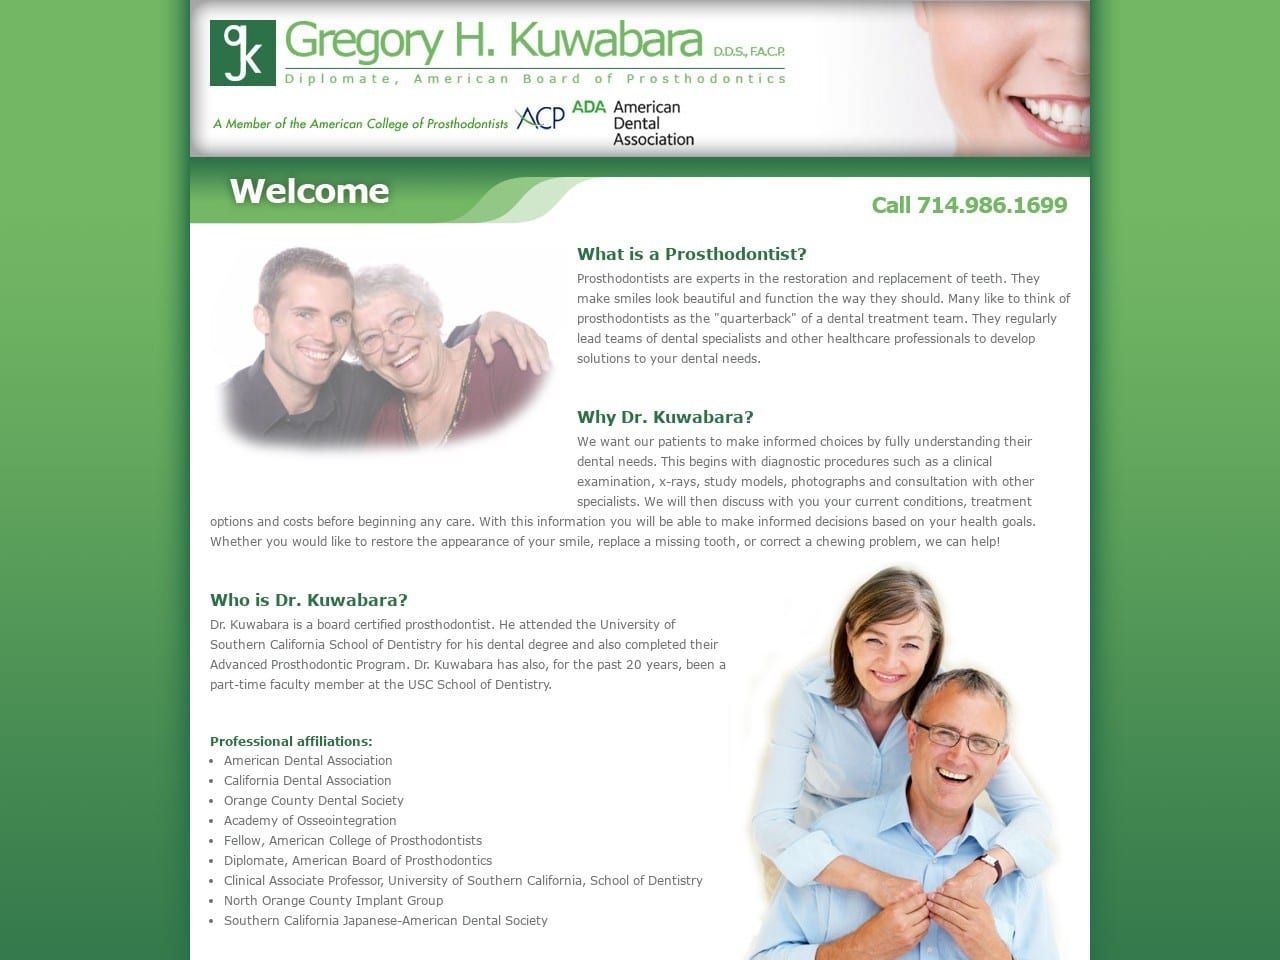 Gregory H. Kuwabara DDS F.A.C.P Website Screenshot from kuwabaradental.com